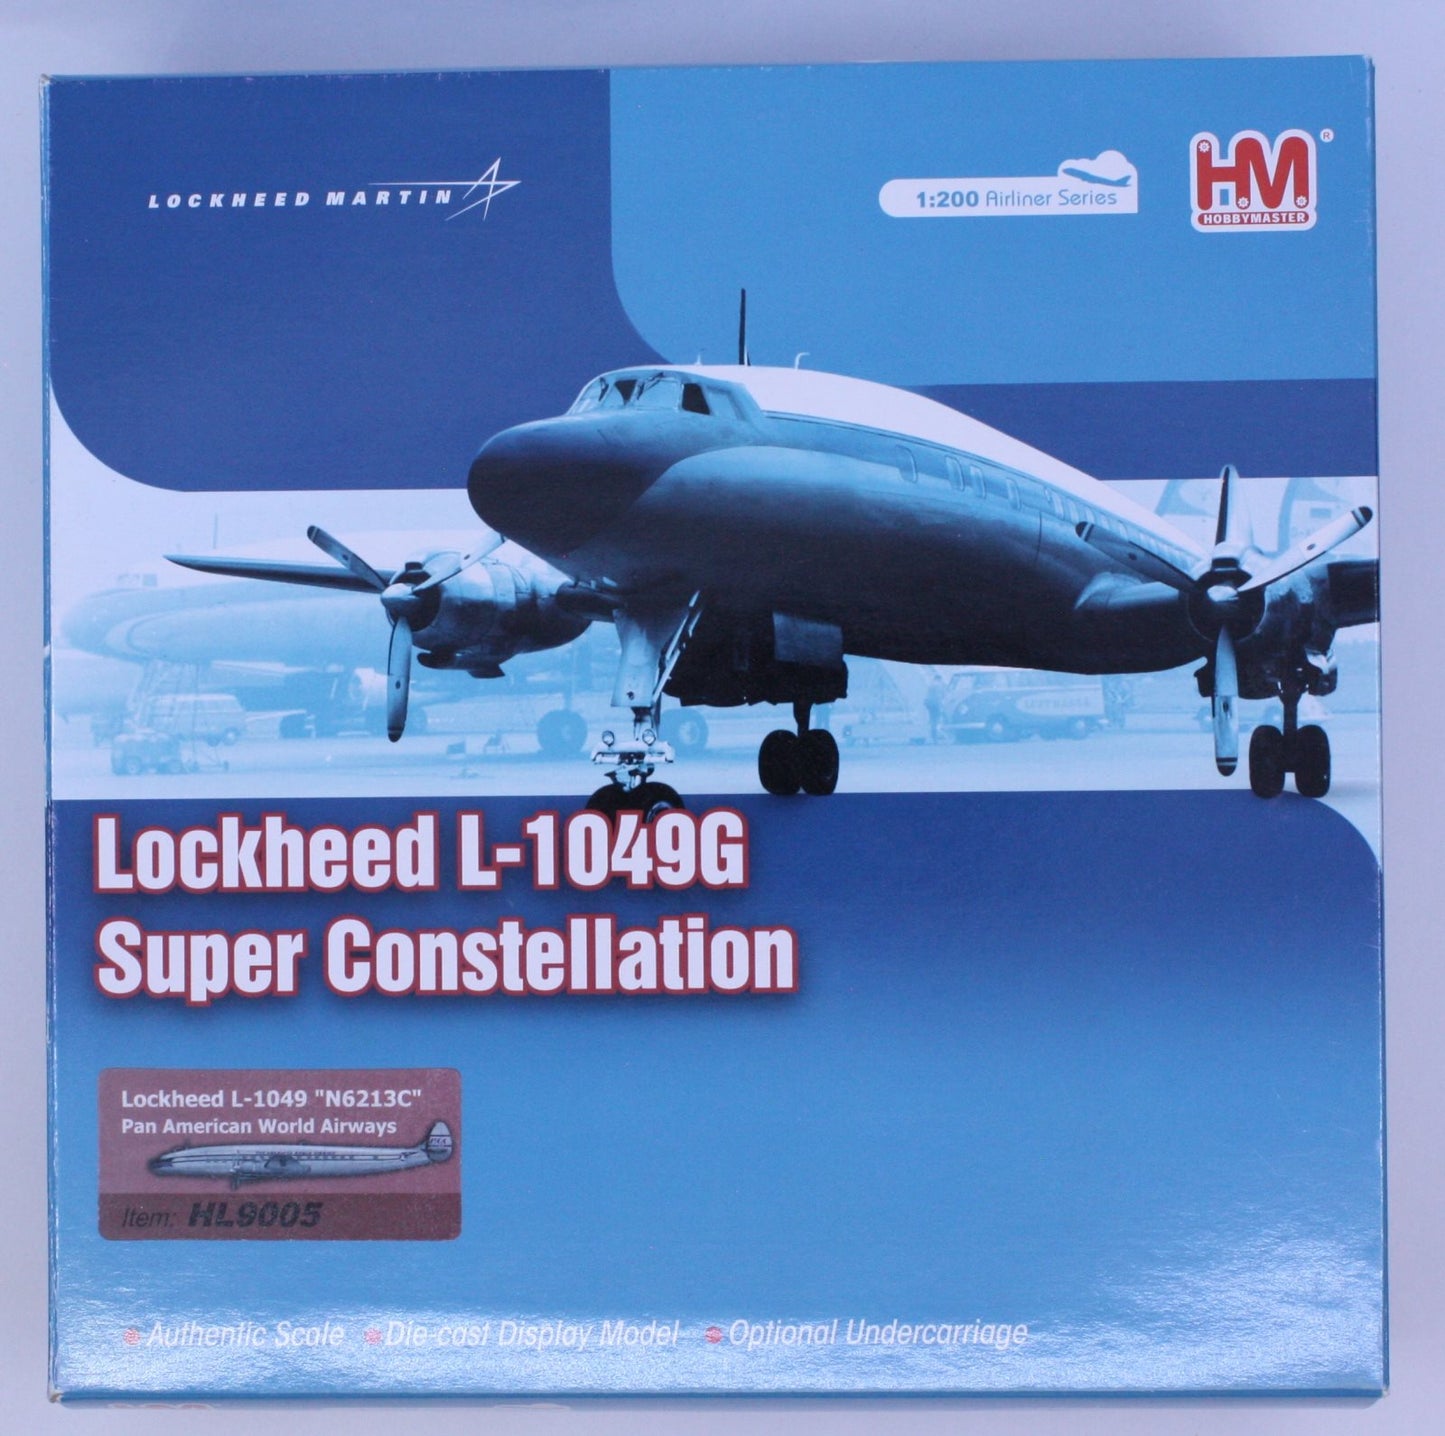 Hobby Master HL9005 Lockheed L-1049G Super Constellation "N6213C